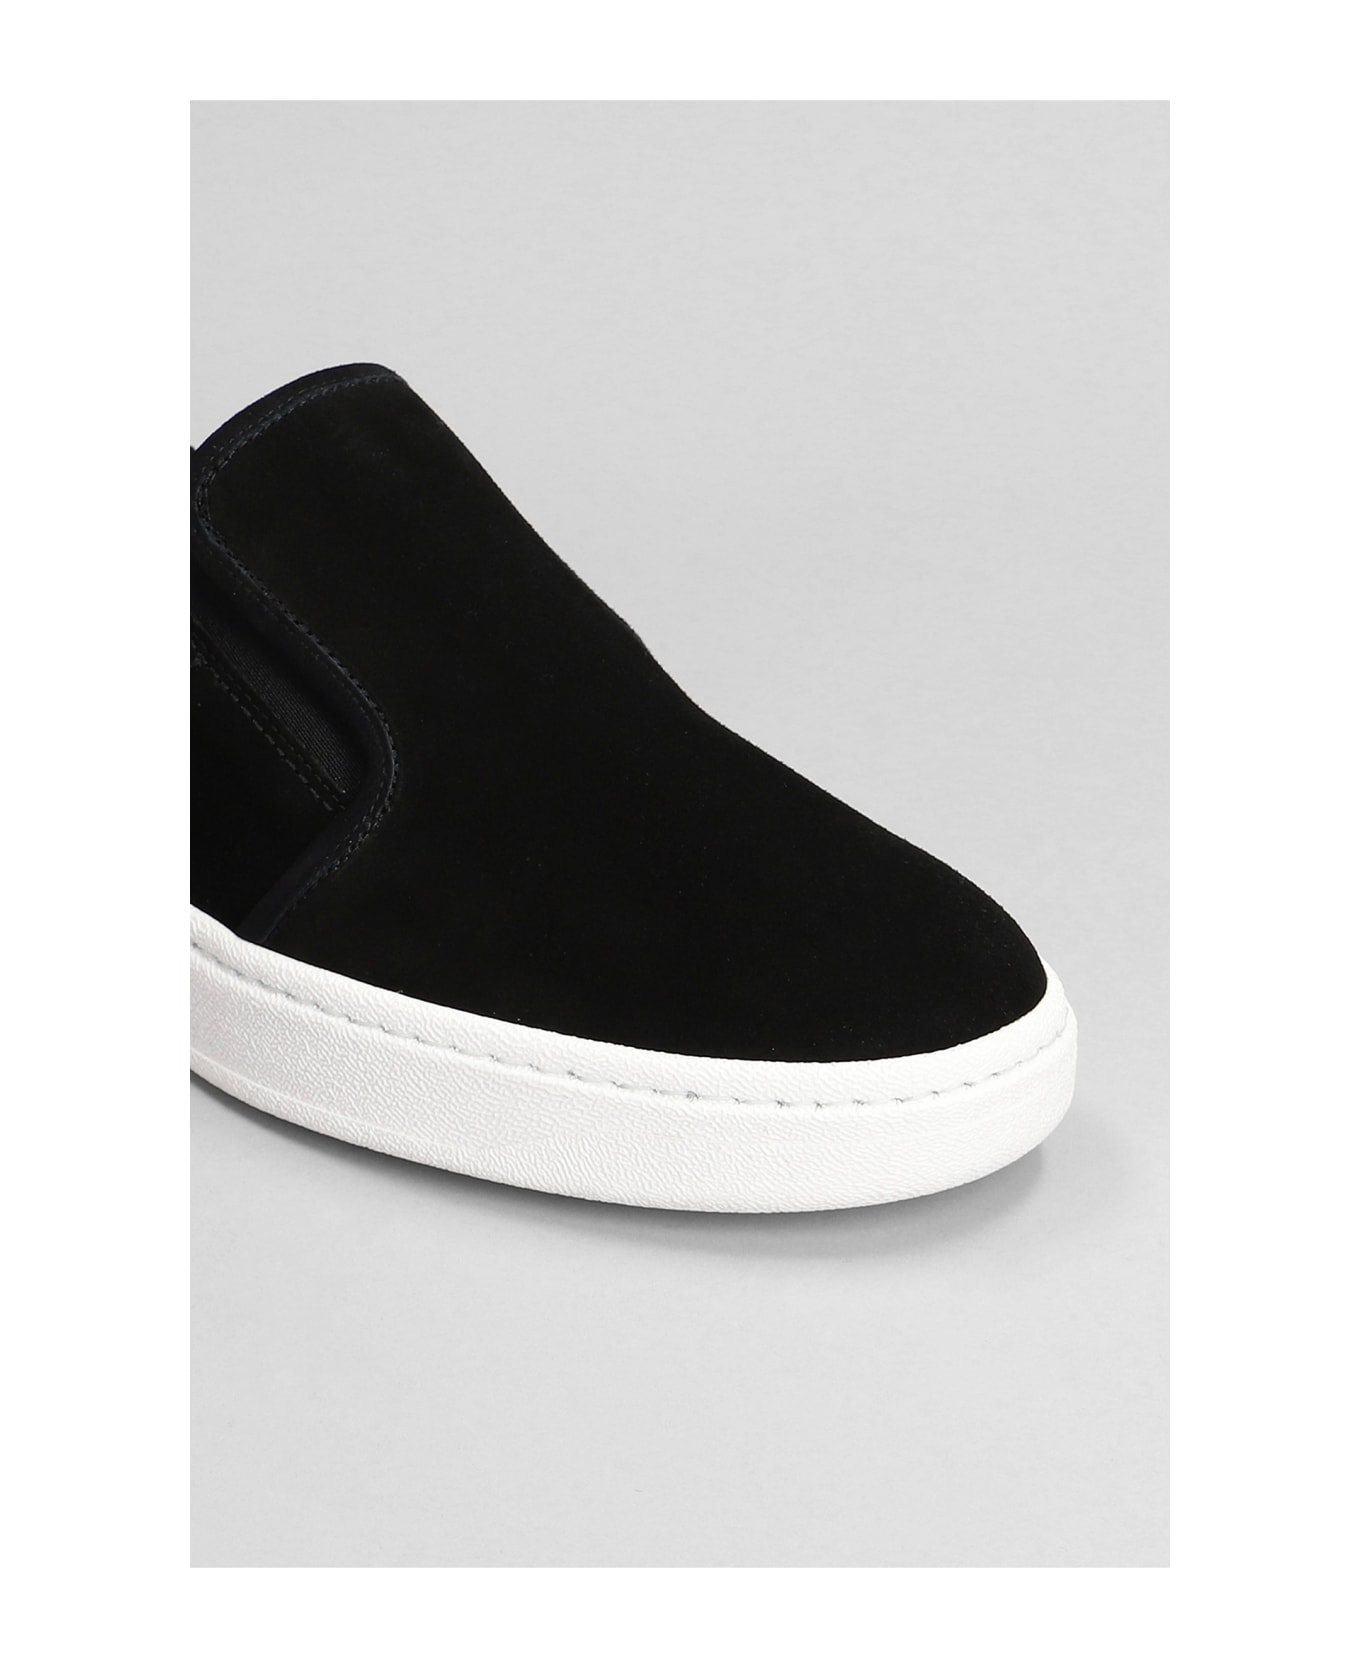 Giuseppe Zanotti Sneakers In Black Suede - black